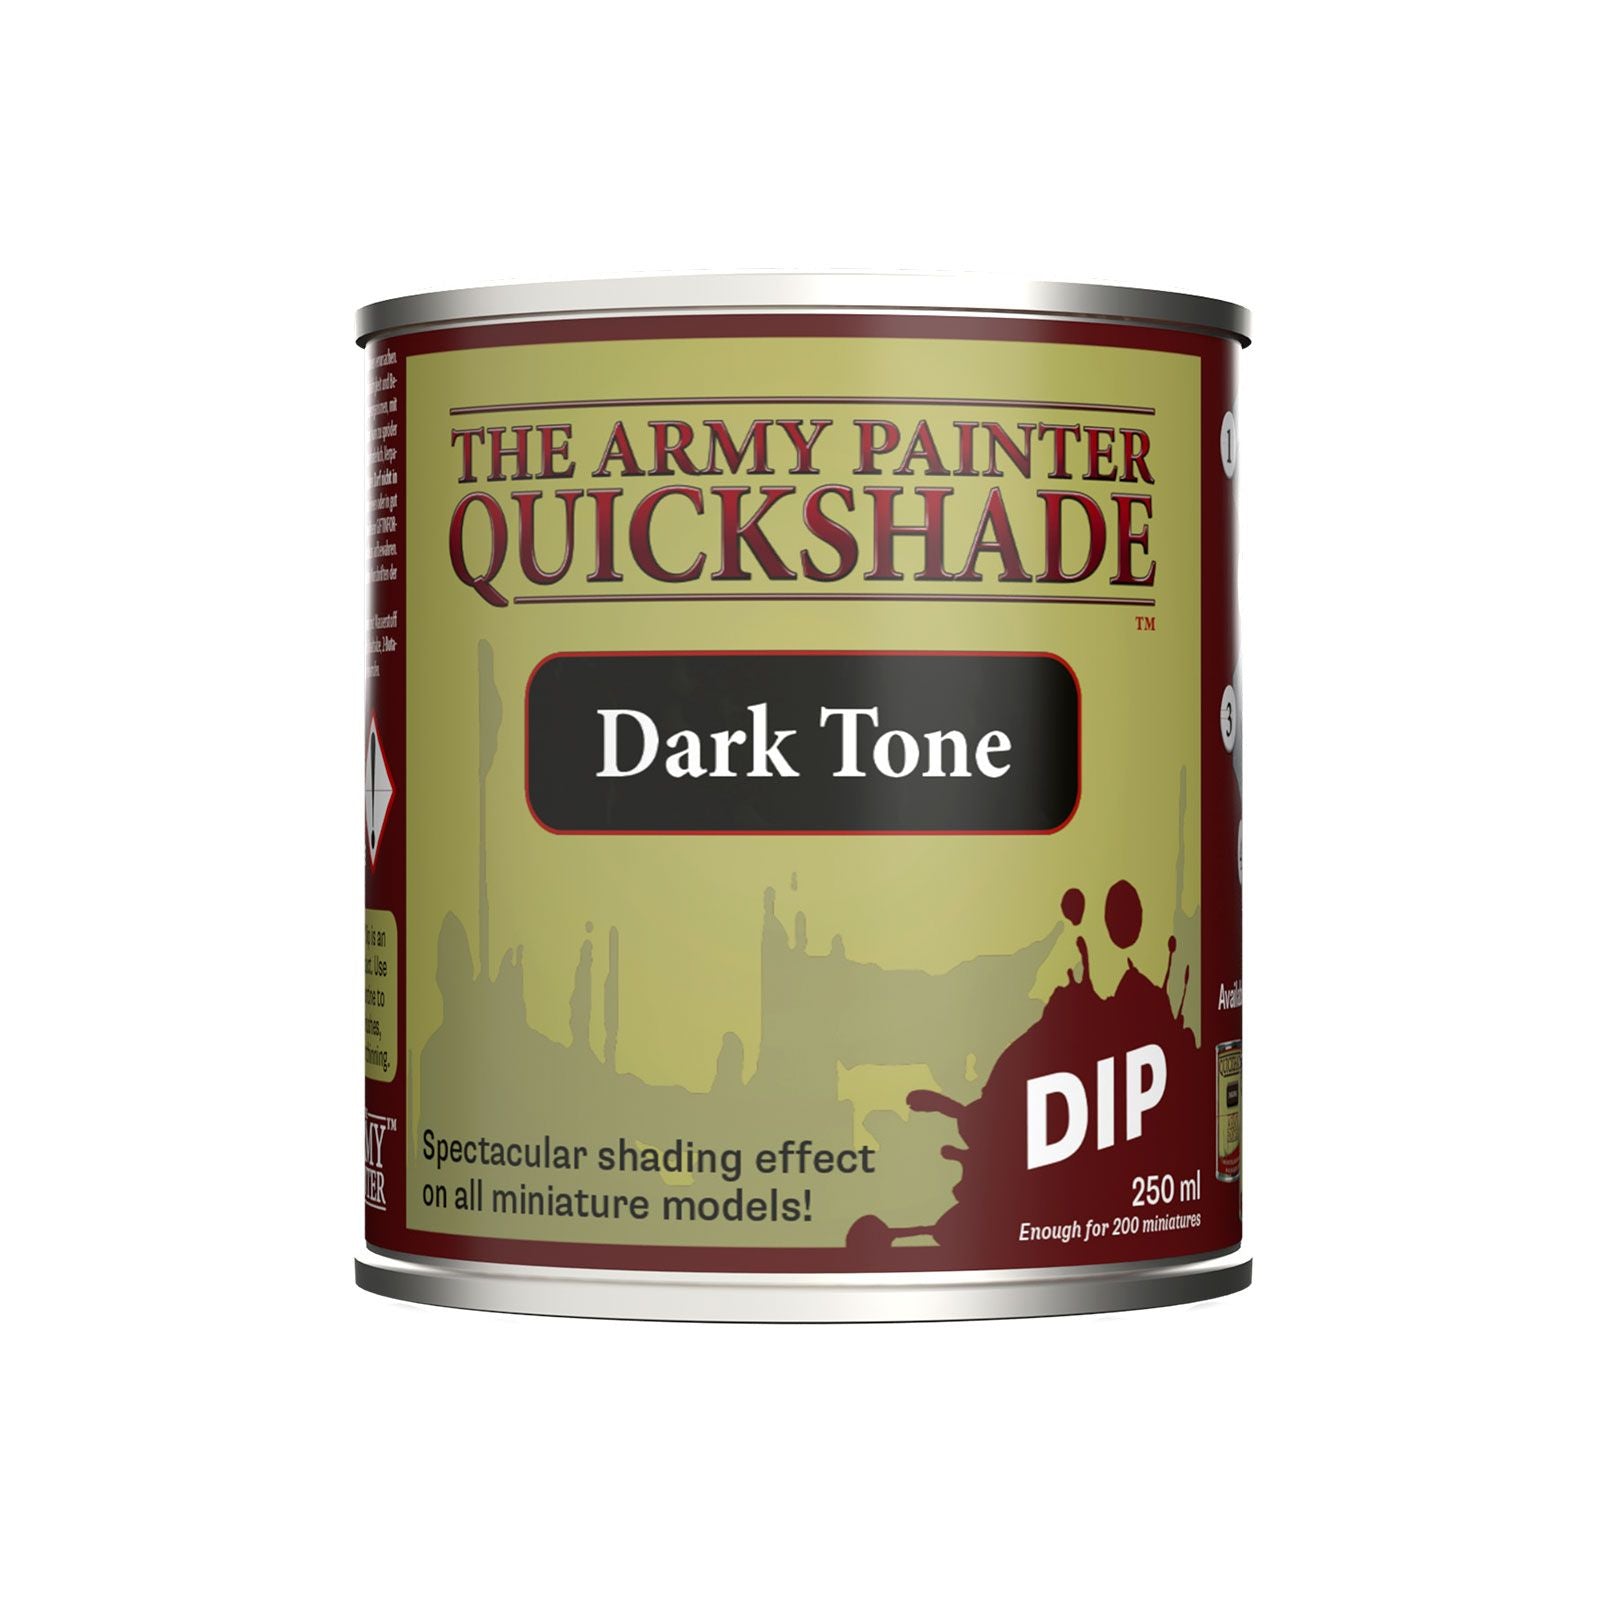 Army Painter Quickshade Dark Tone Dip 250ml | Impulse Games and Hobbies